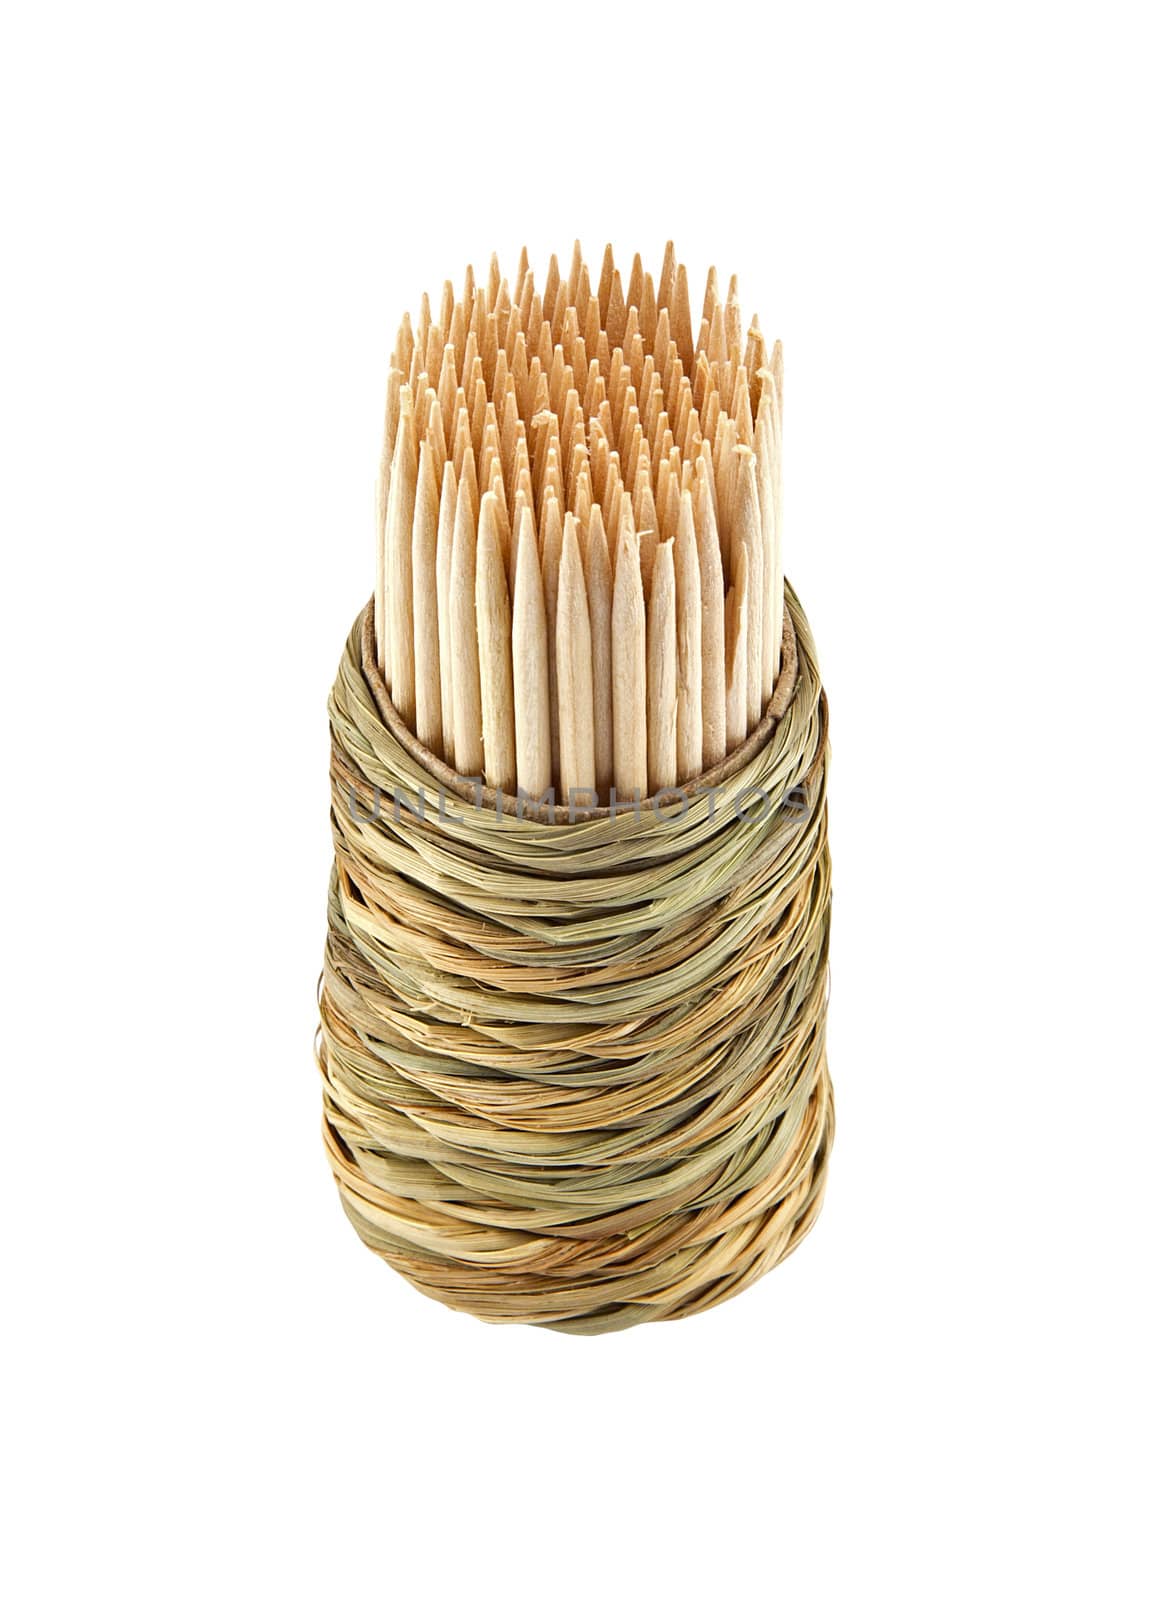 Toothpicks by renegadewanderer